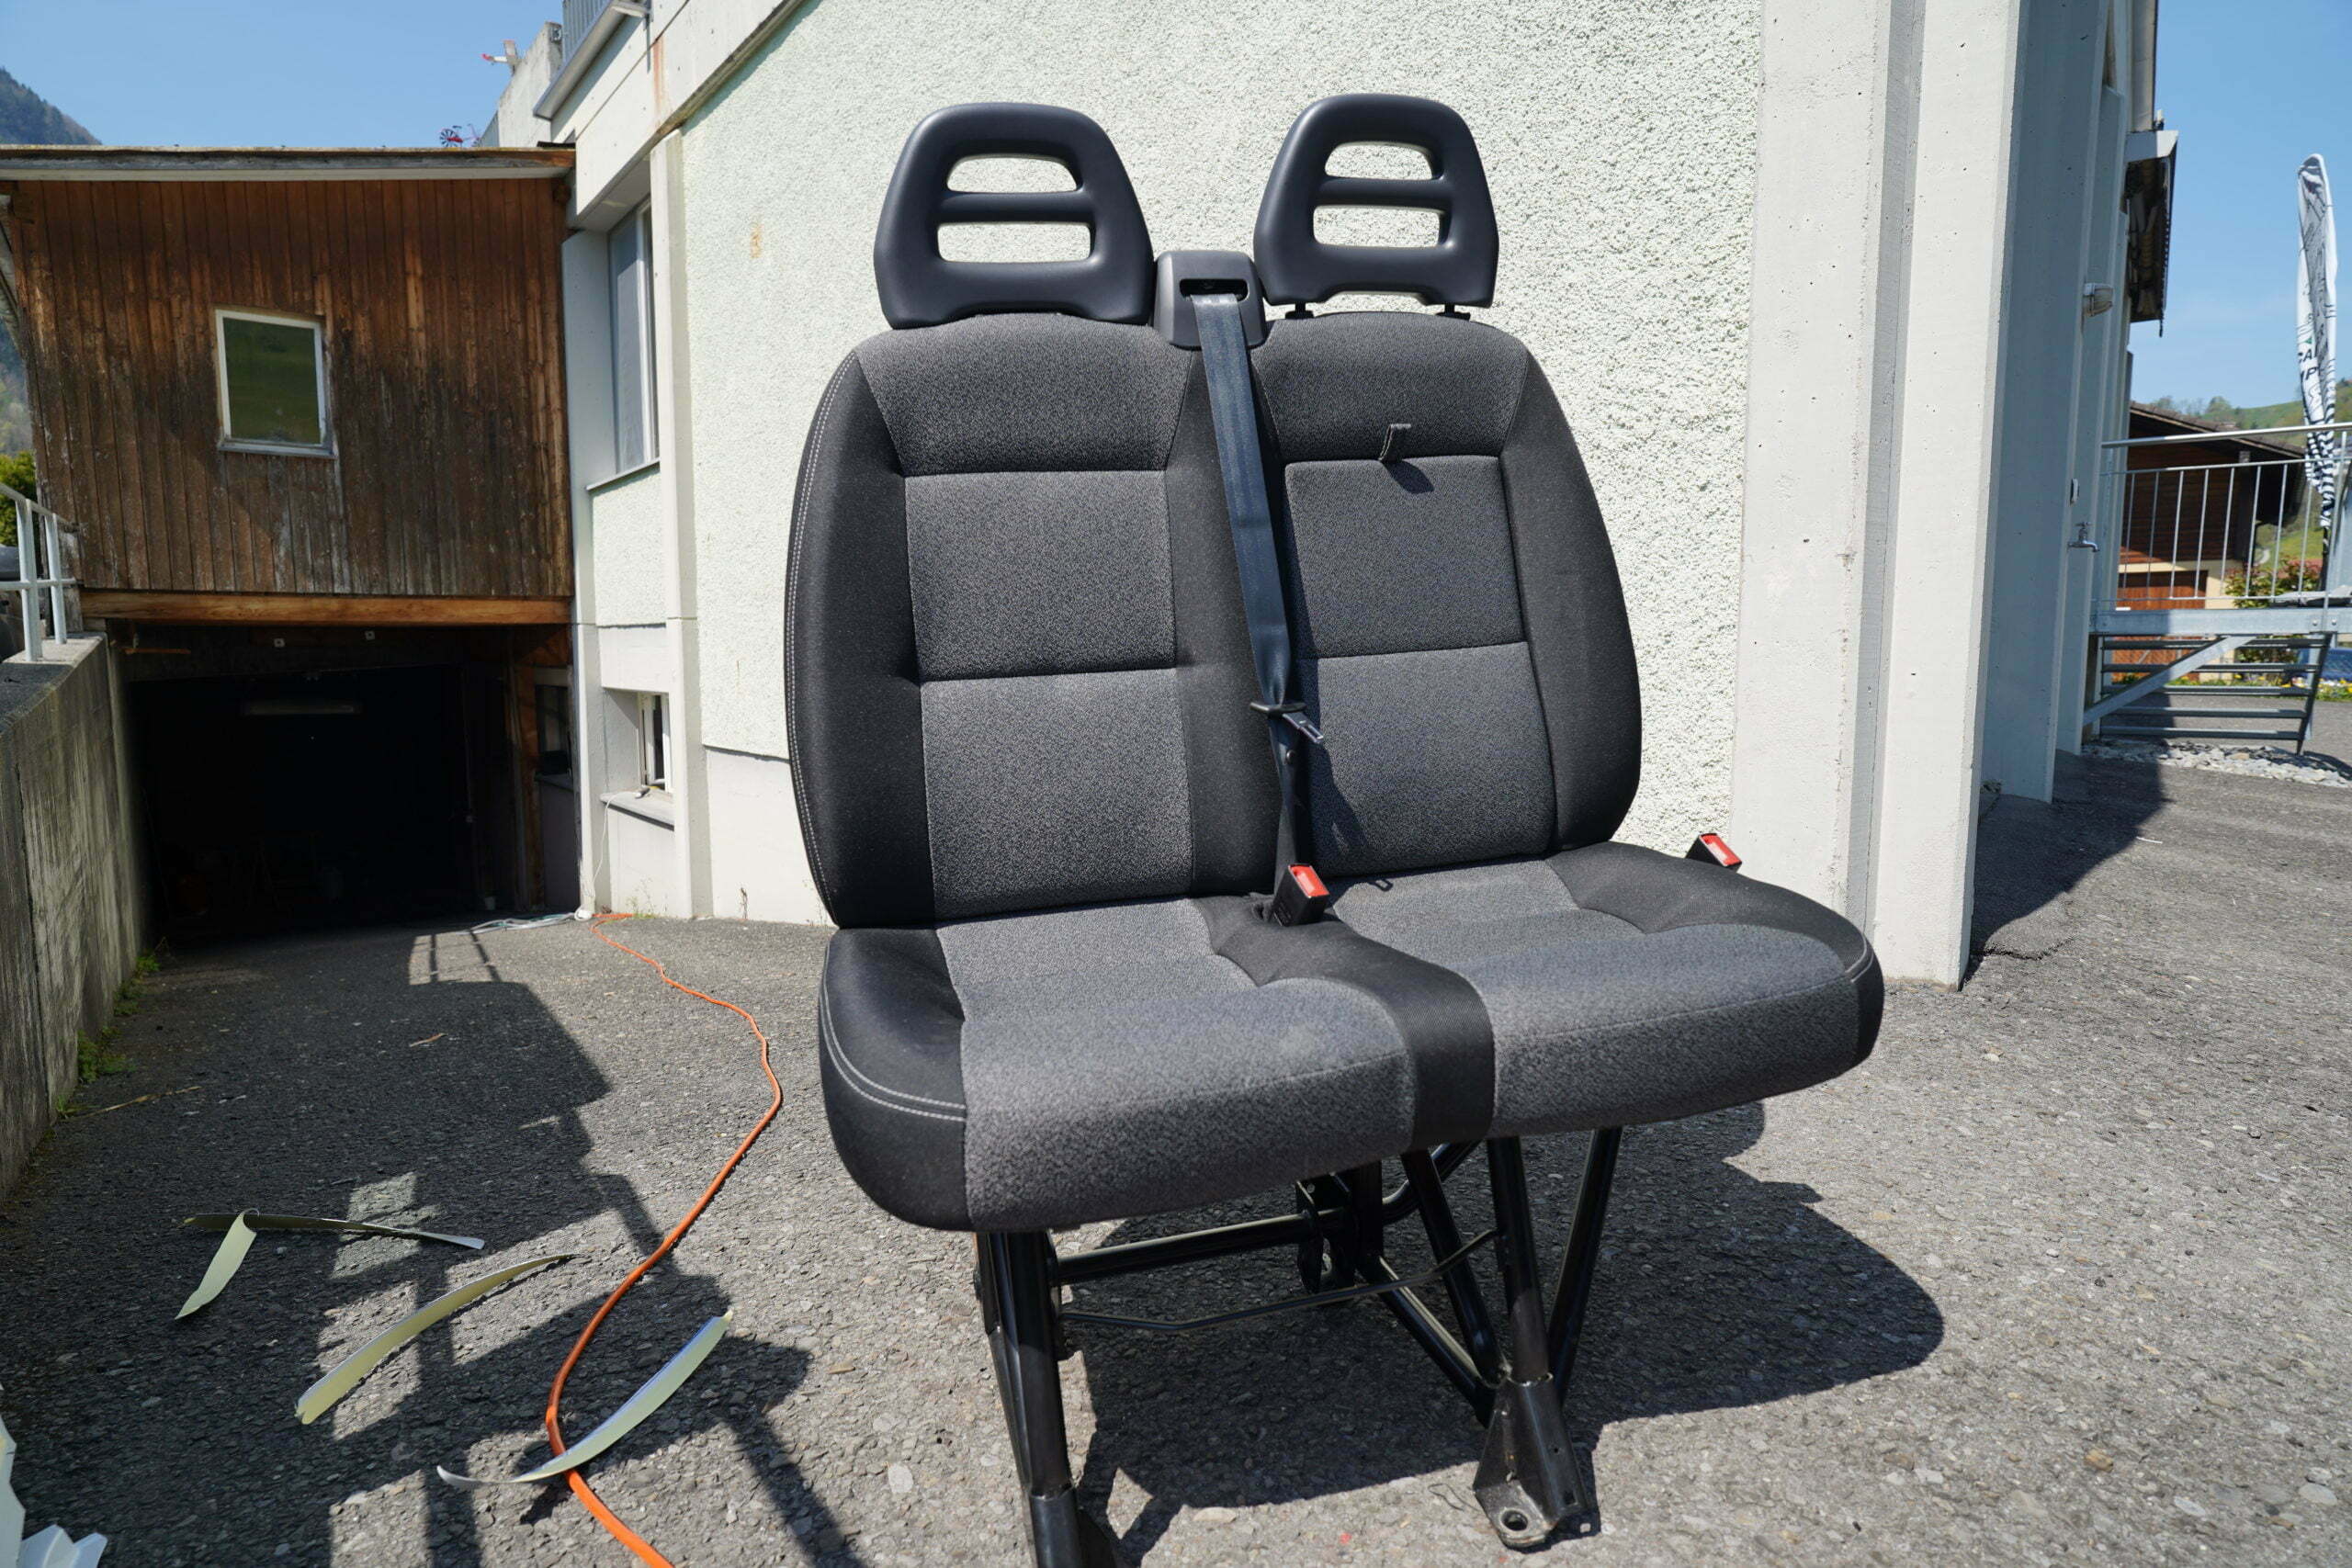 Double Swivel Seat for Sprinter van conversion